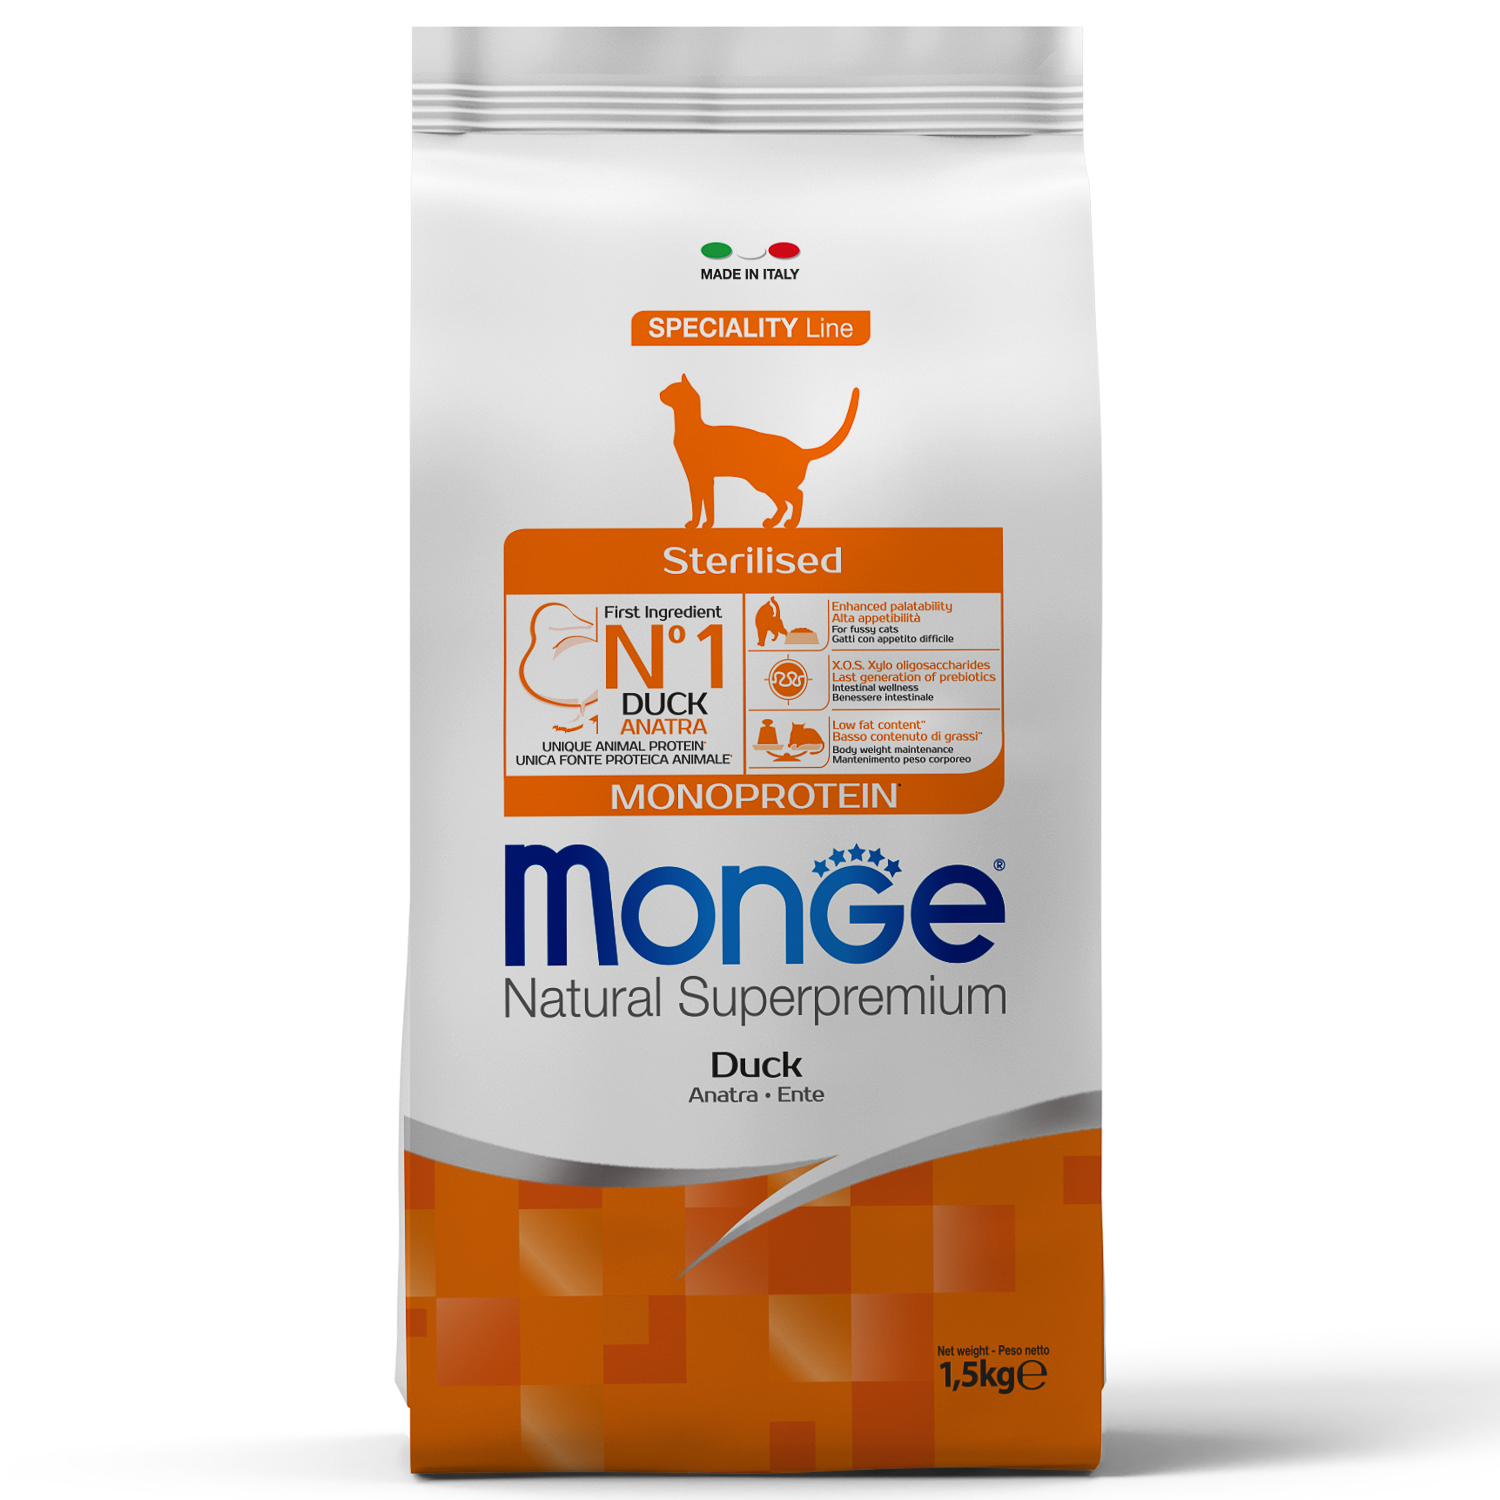 Сухой корм Monge Cat Speciality Line Monoprotein Sterilised для стерилизованных кошек, из утки 1,5 кг